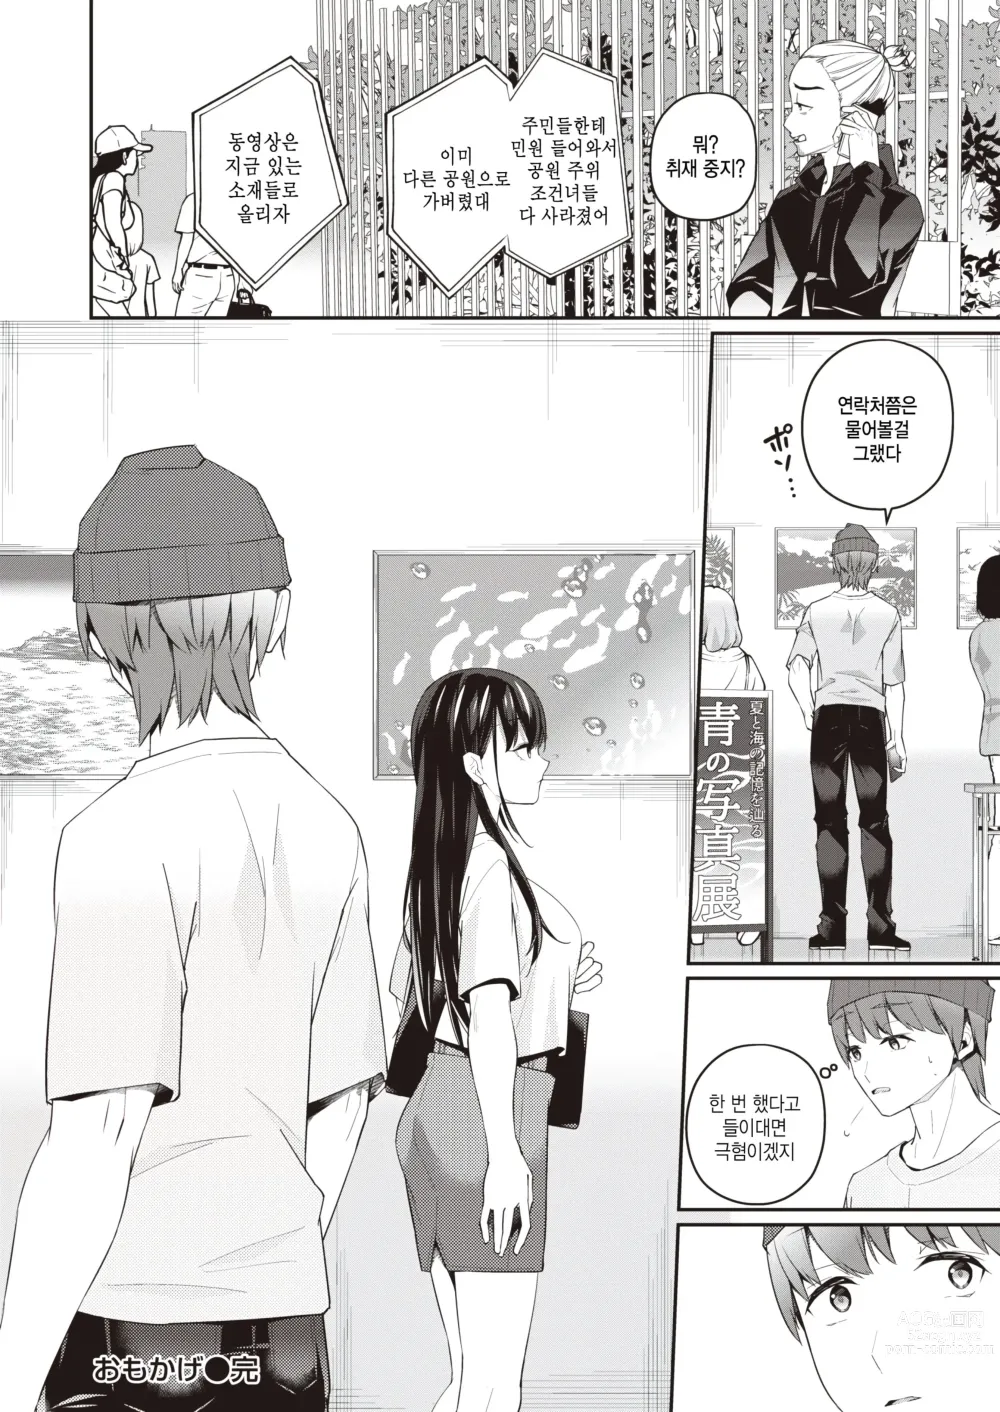 Page 26 of manga Omokage - past shadow